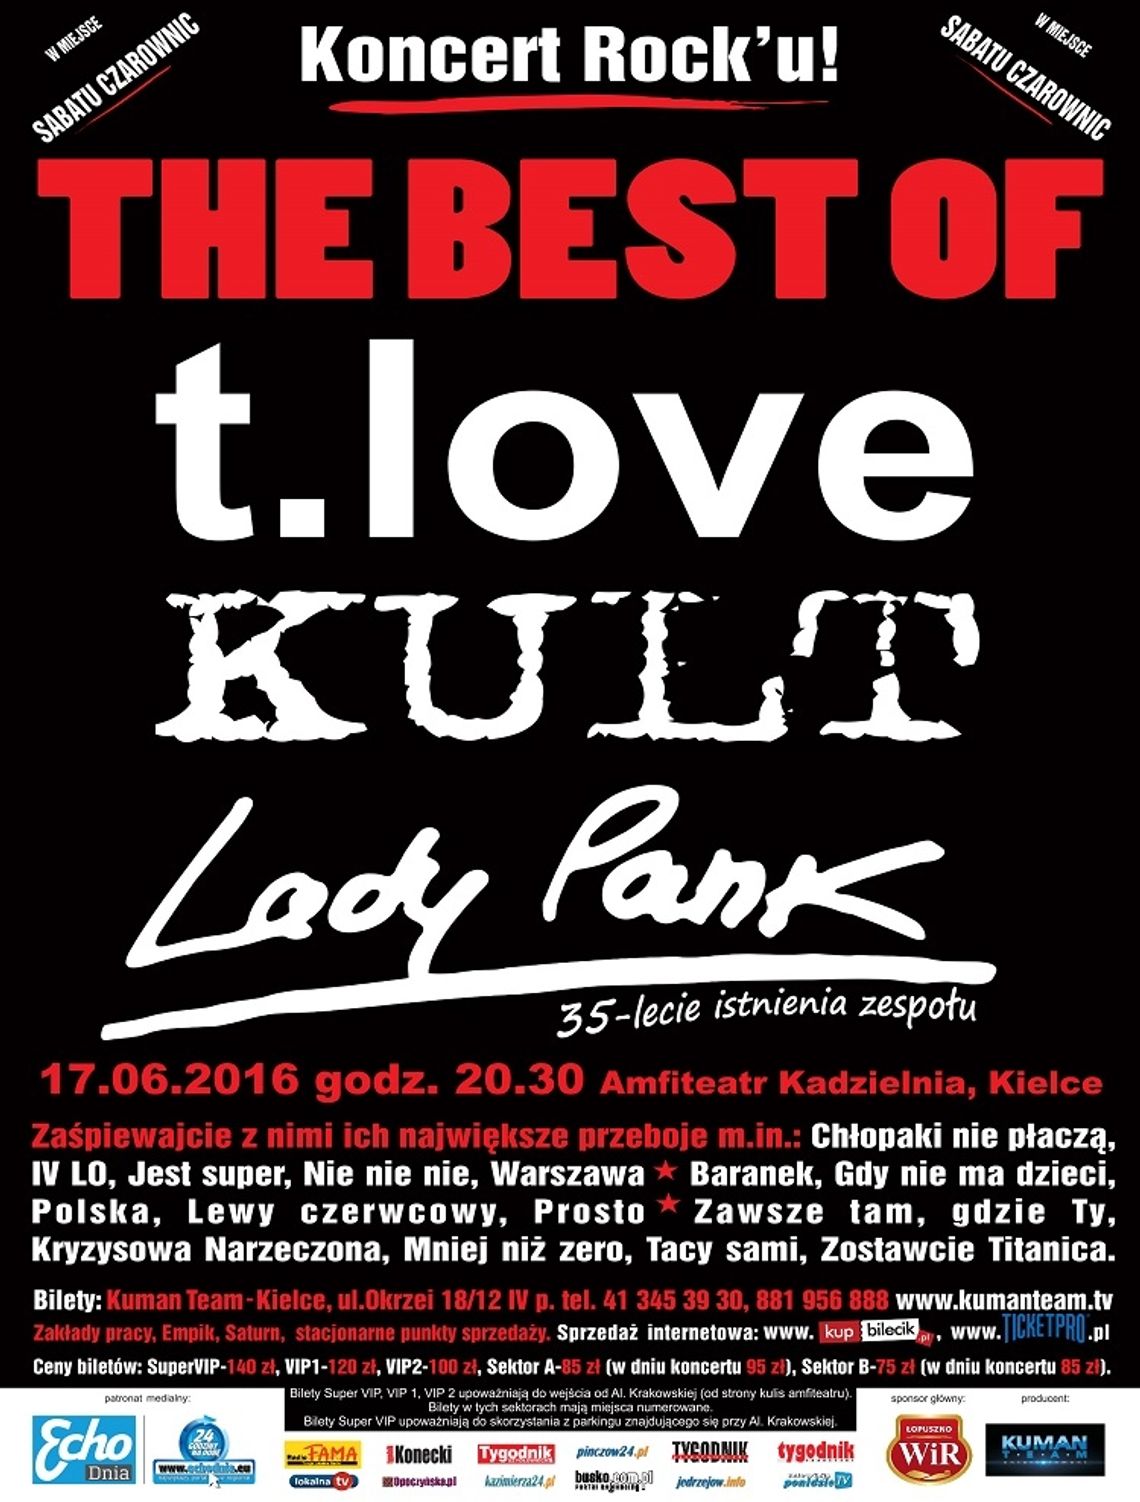 The Best Of - T. LOVE, KULT, LADY PANK